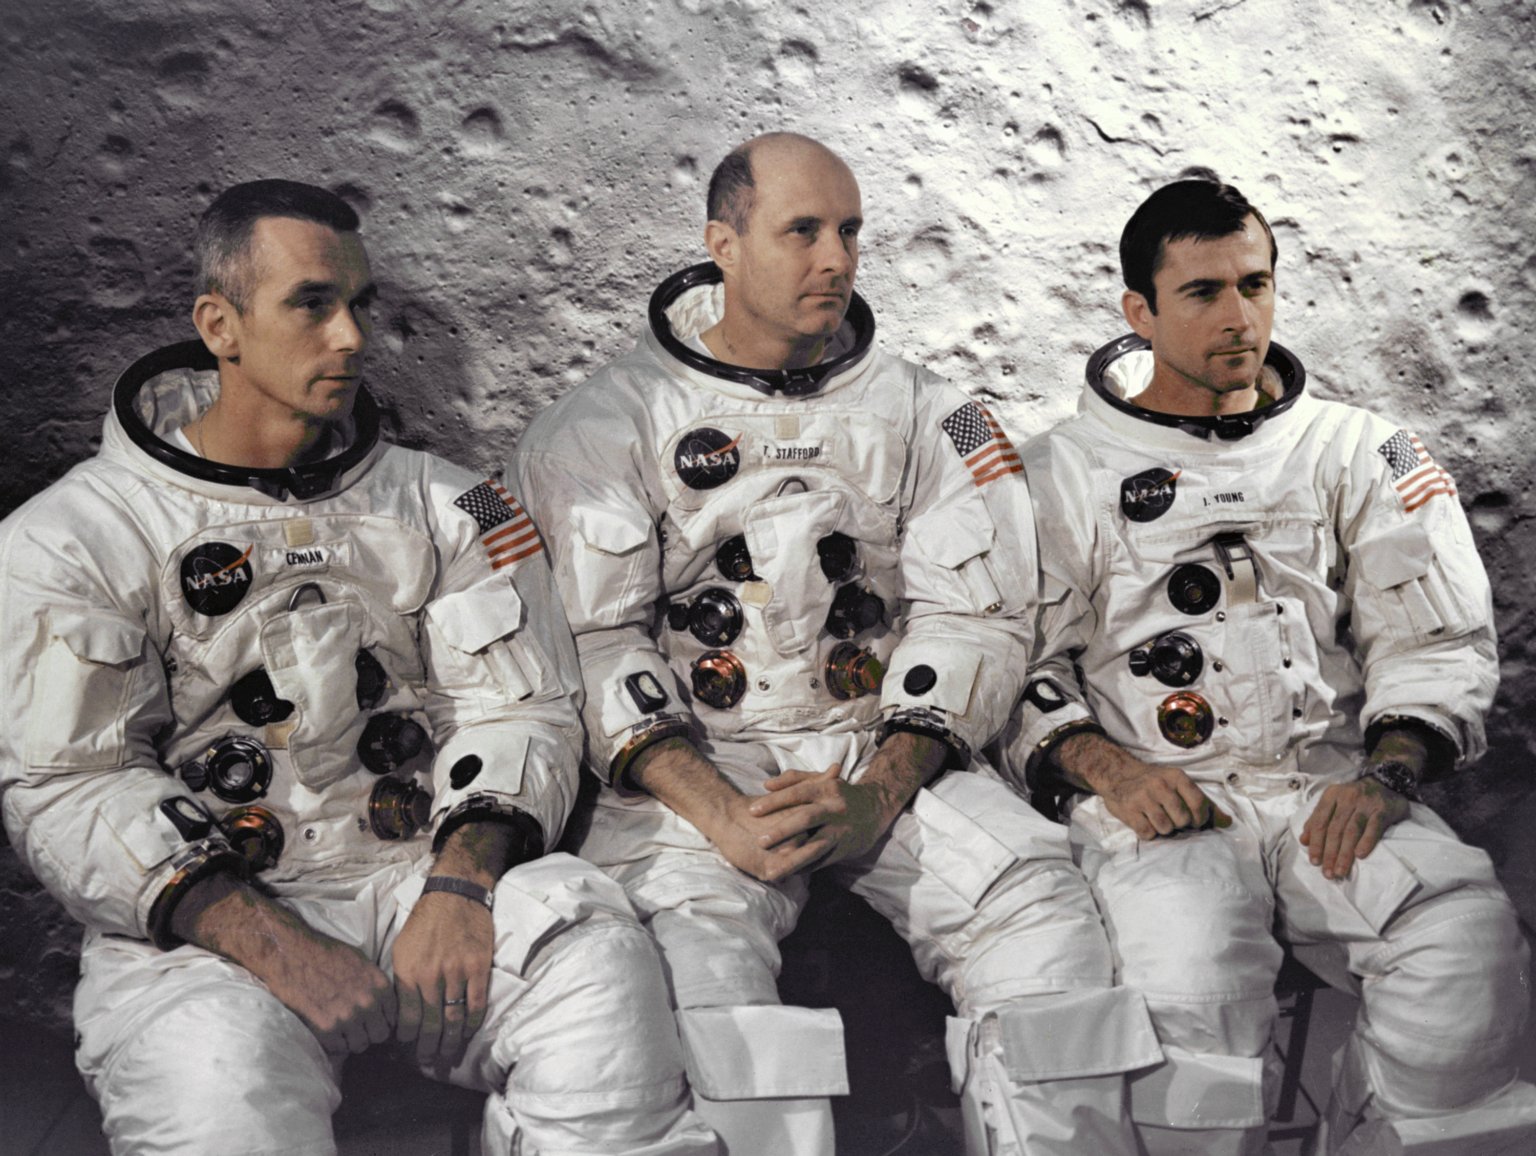 Part Eight - Apollo 10 Mission